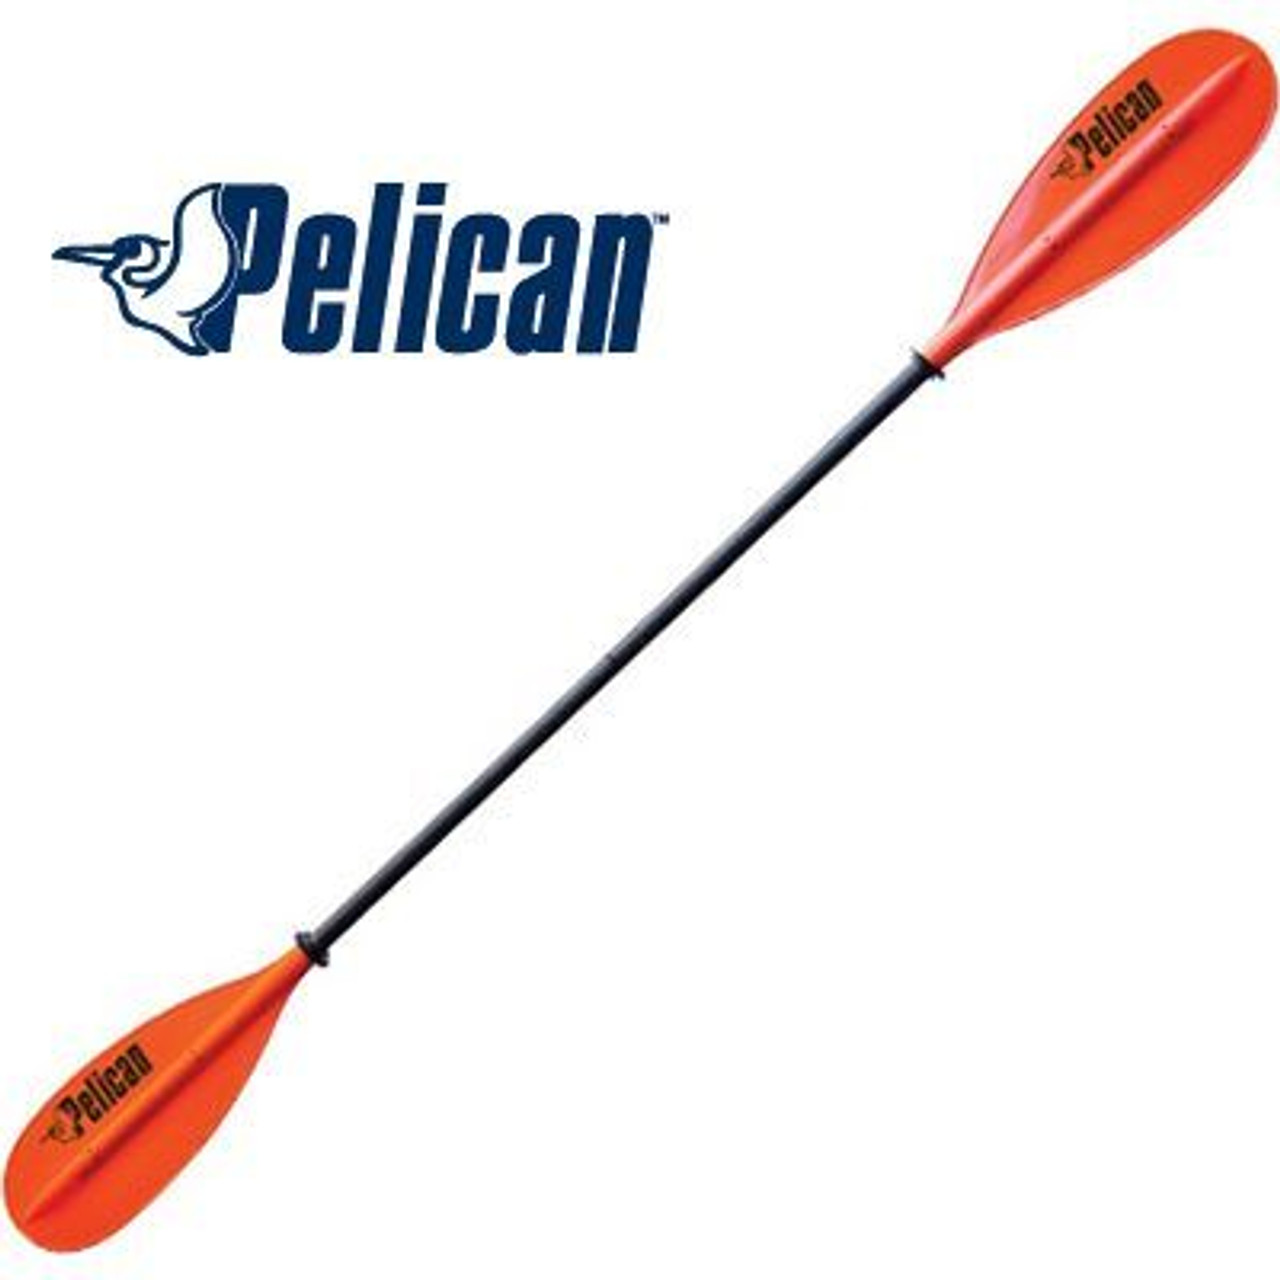 Pelican Kayak Paddle Aluminum - Watersports West